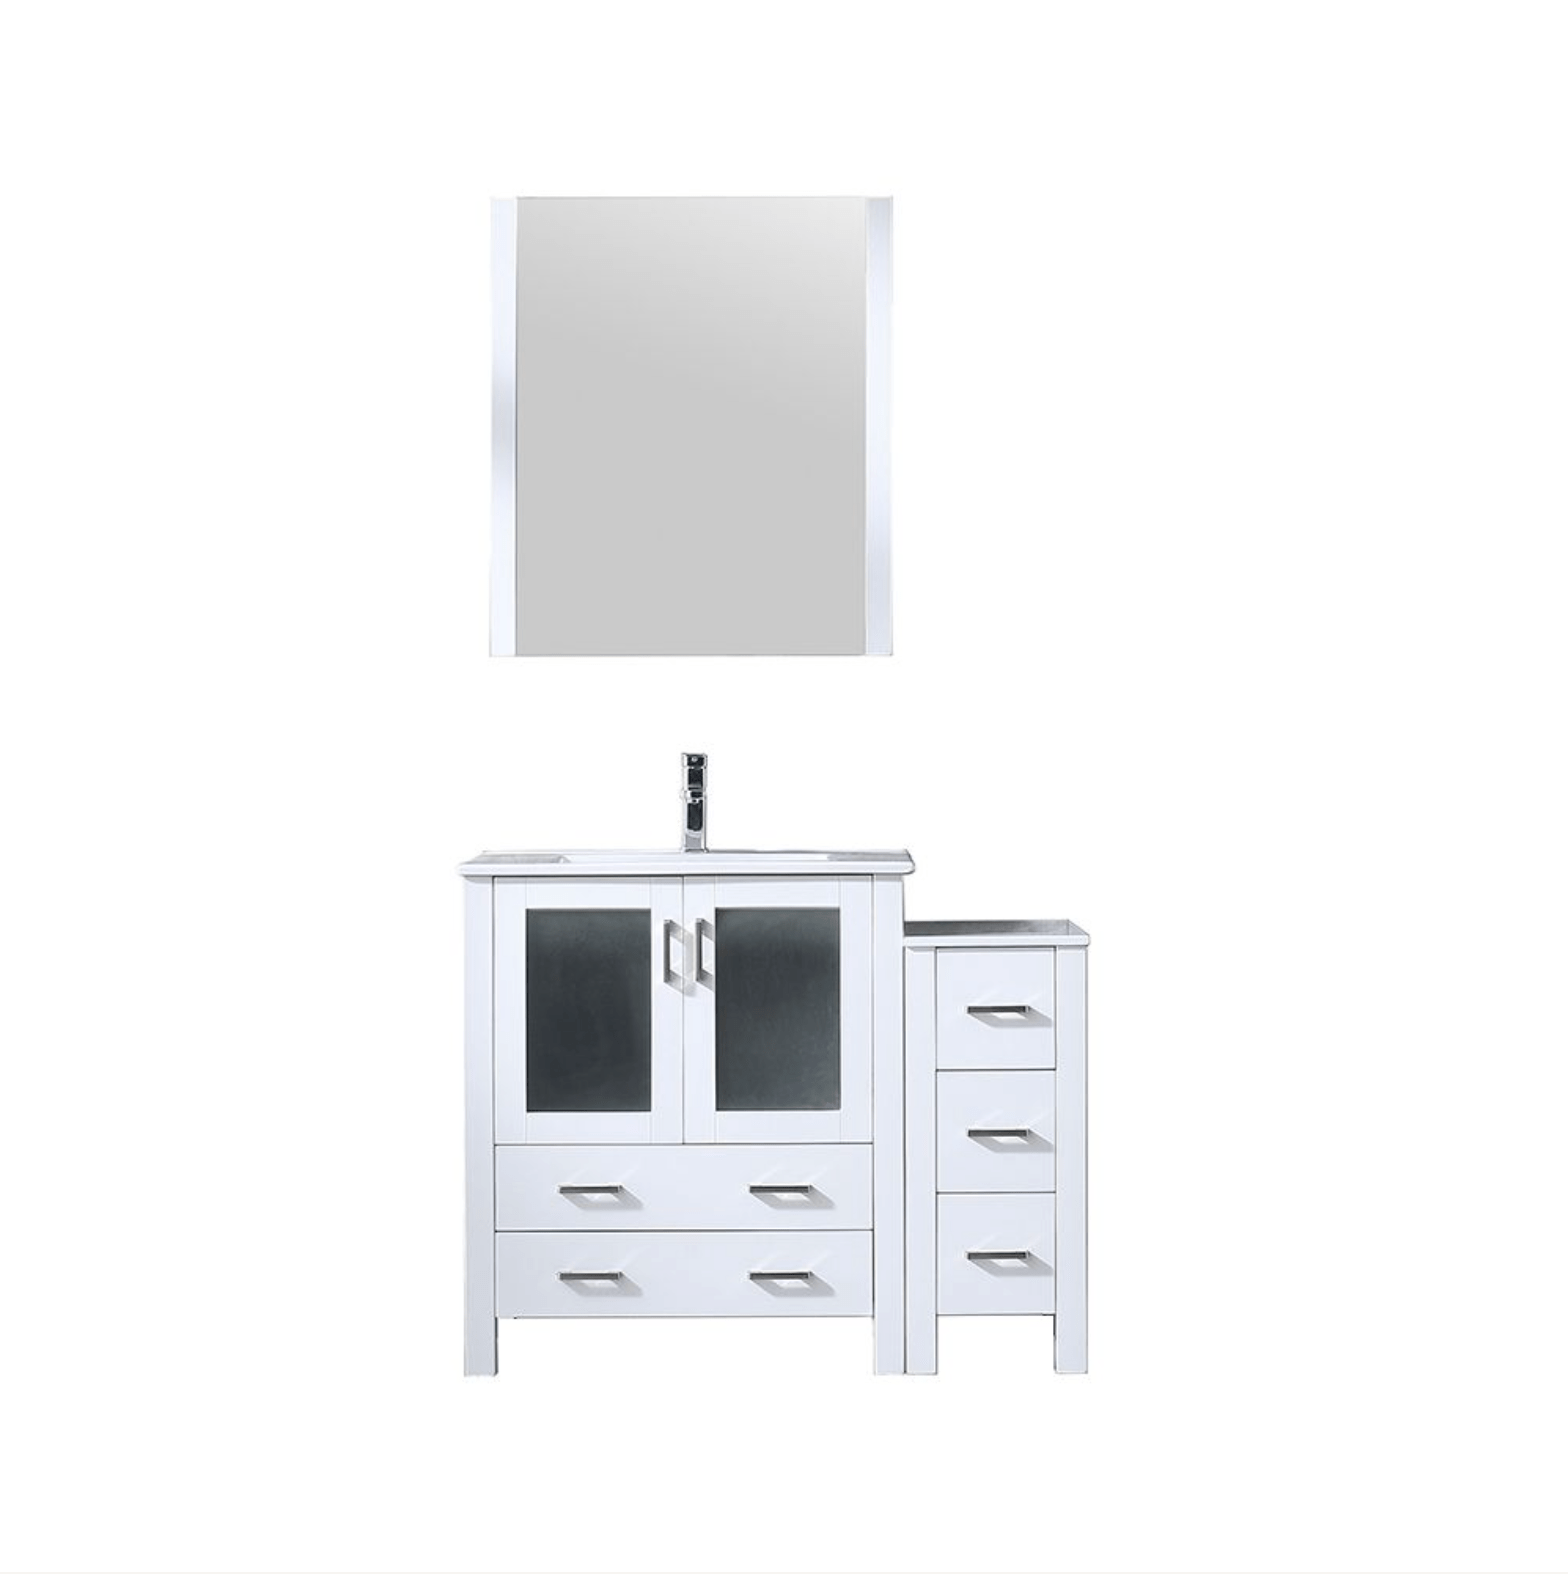 Bell + Modern Bathroom Vanity Harborfront Single Bath Vanity with Side Cabinet